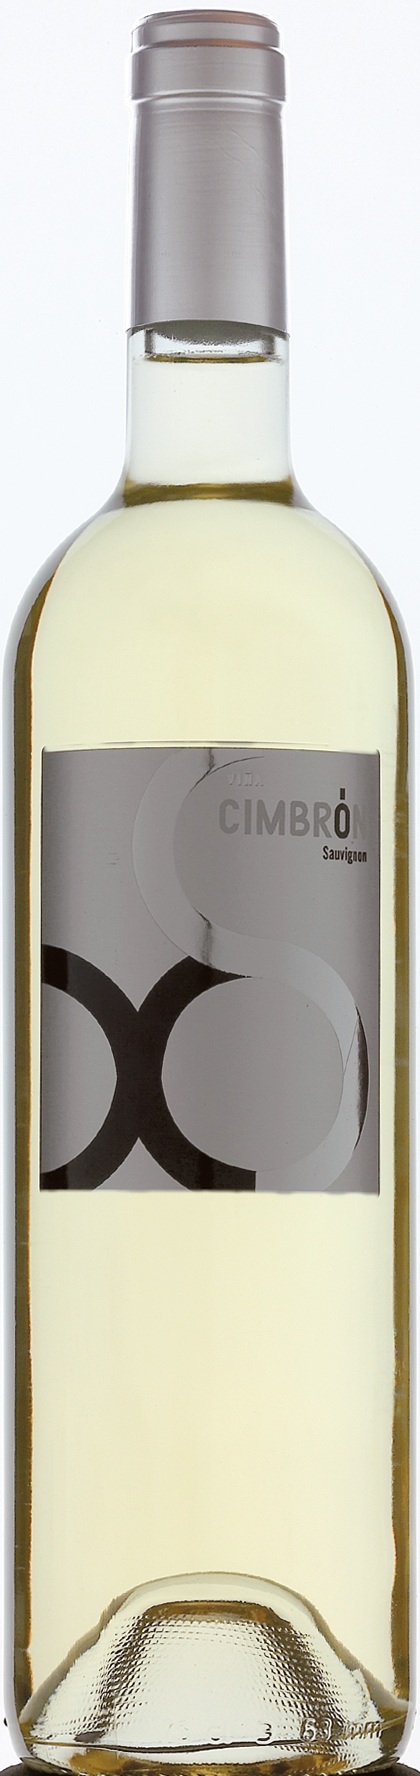 Image of Wine bottle Viña Cimbrón Sauvignon